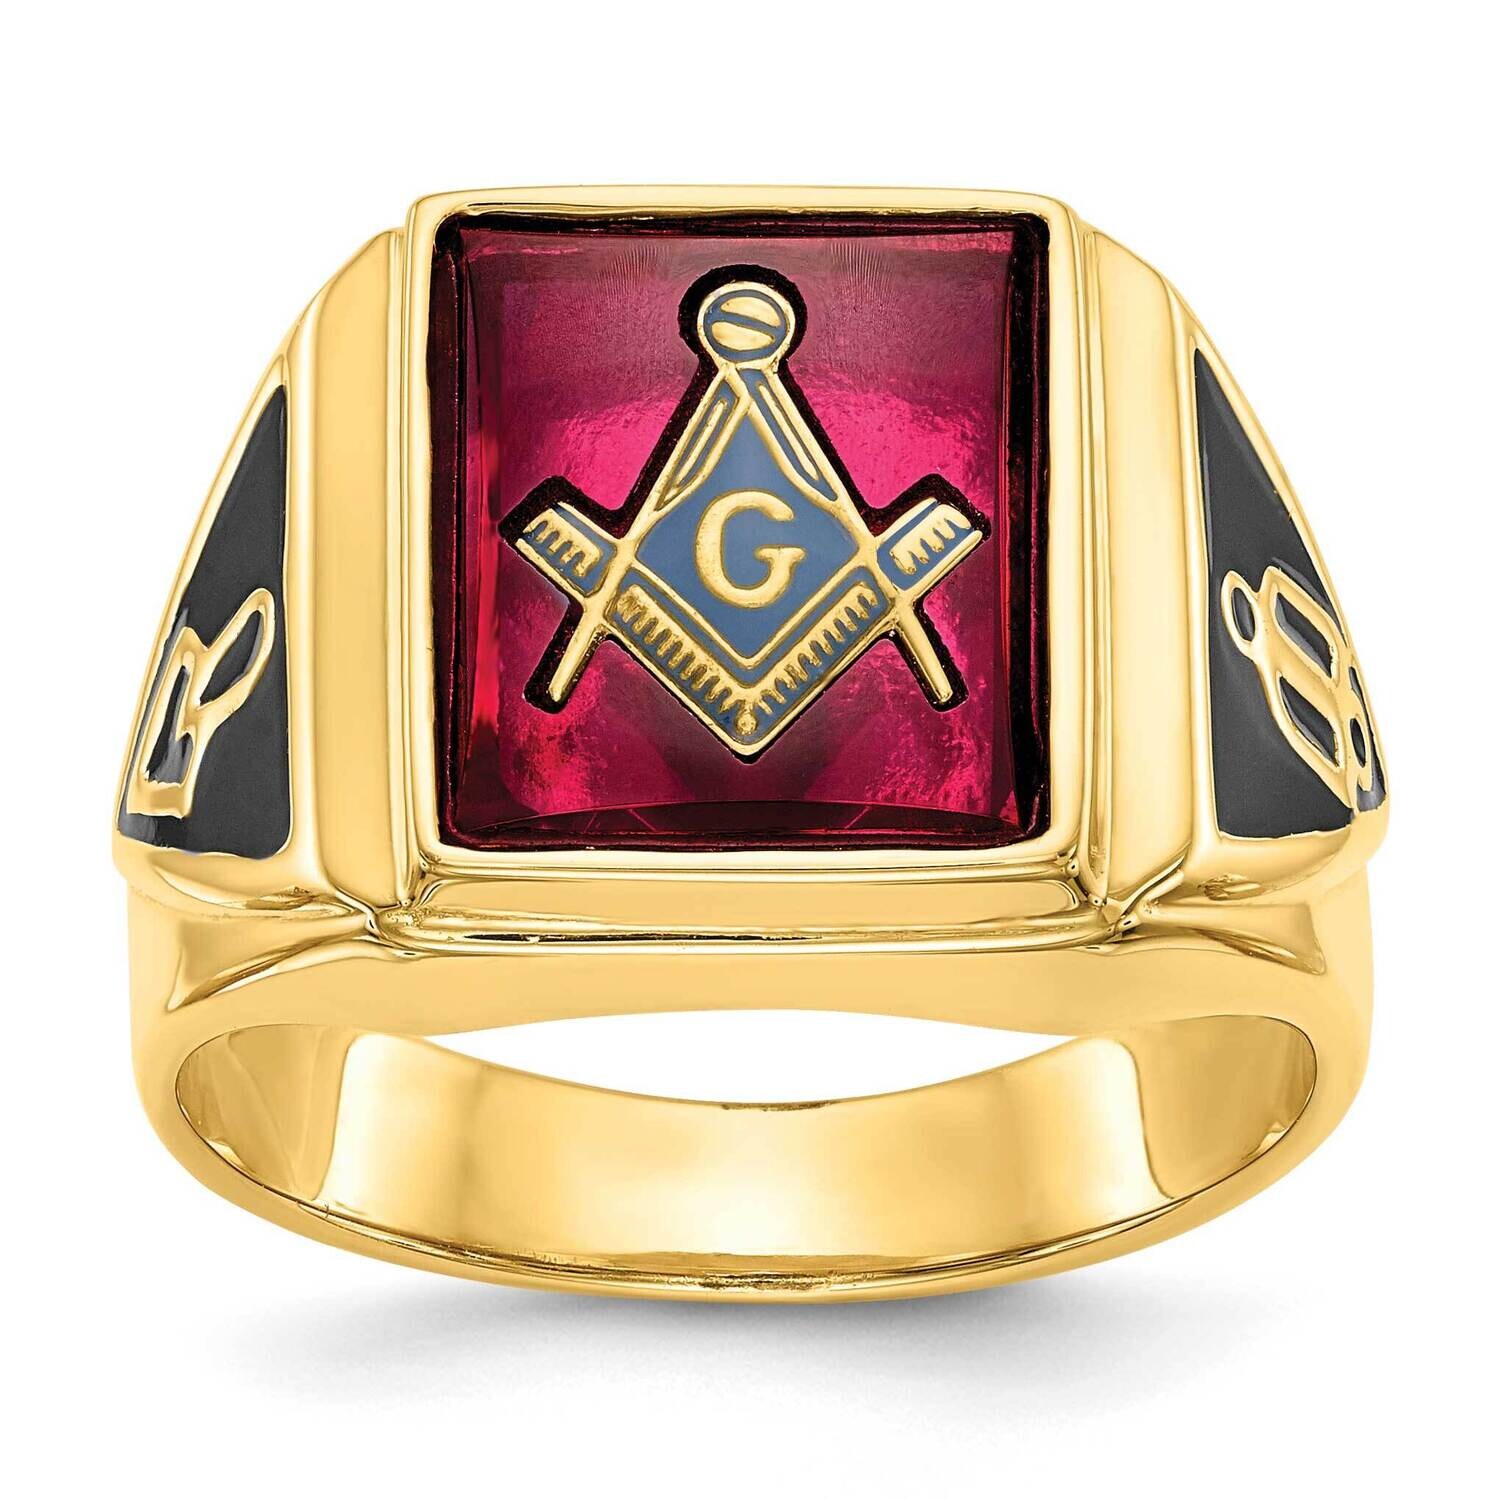 Men's Polished Textured Masonic Ring Mounting 10k Gold 10Y1576